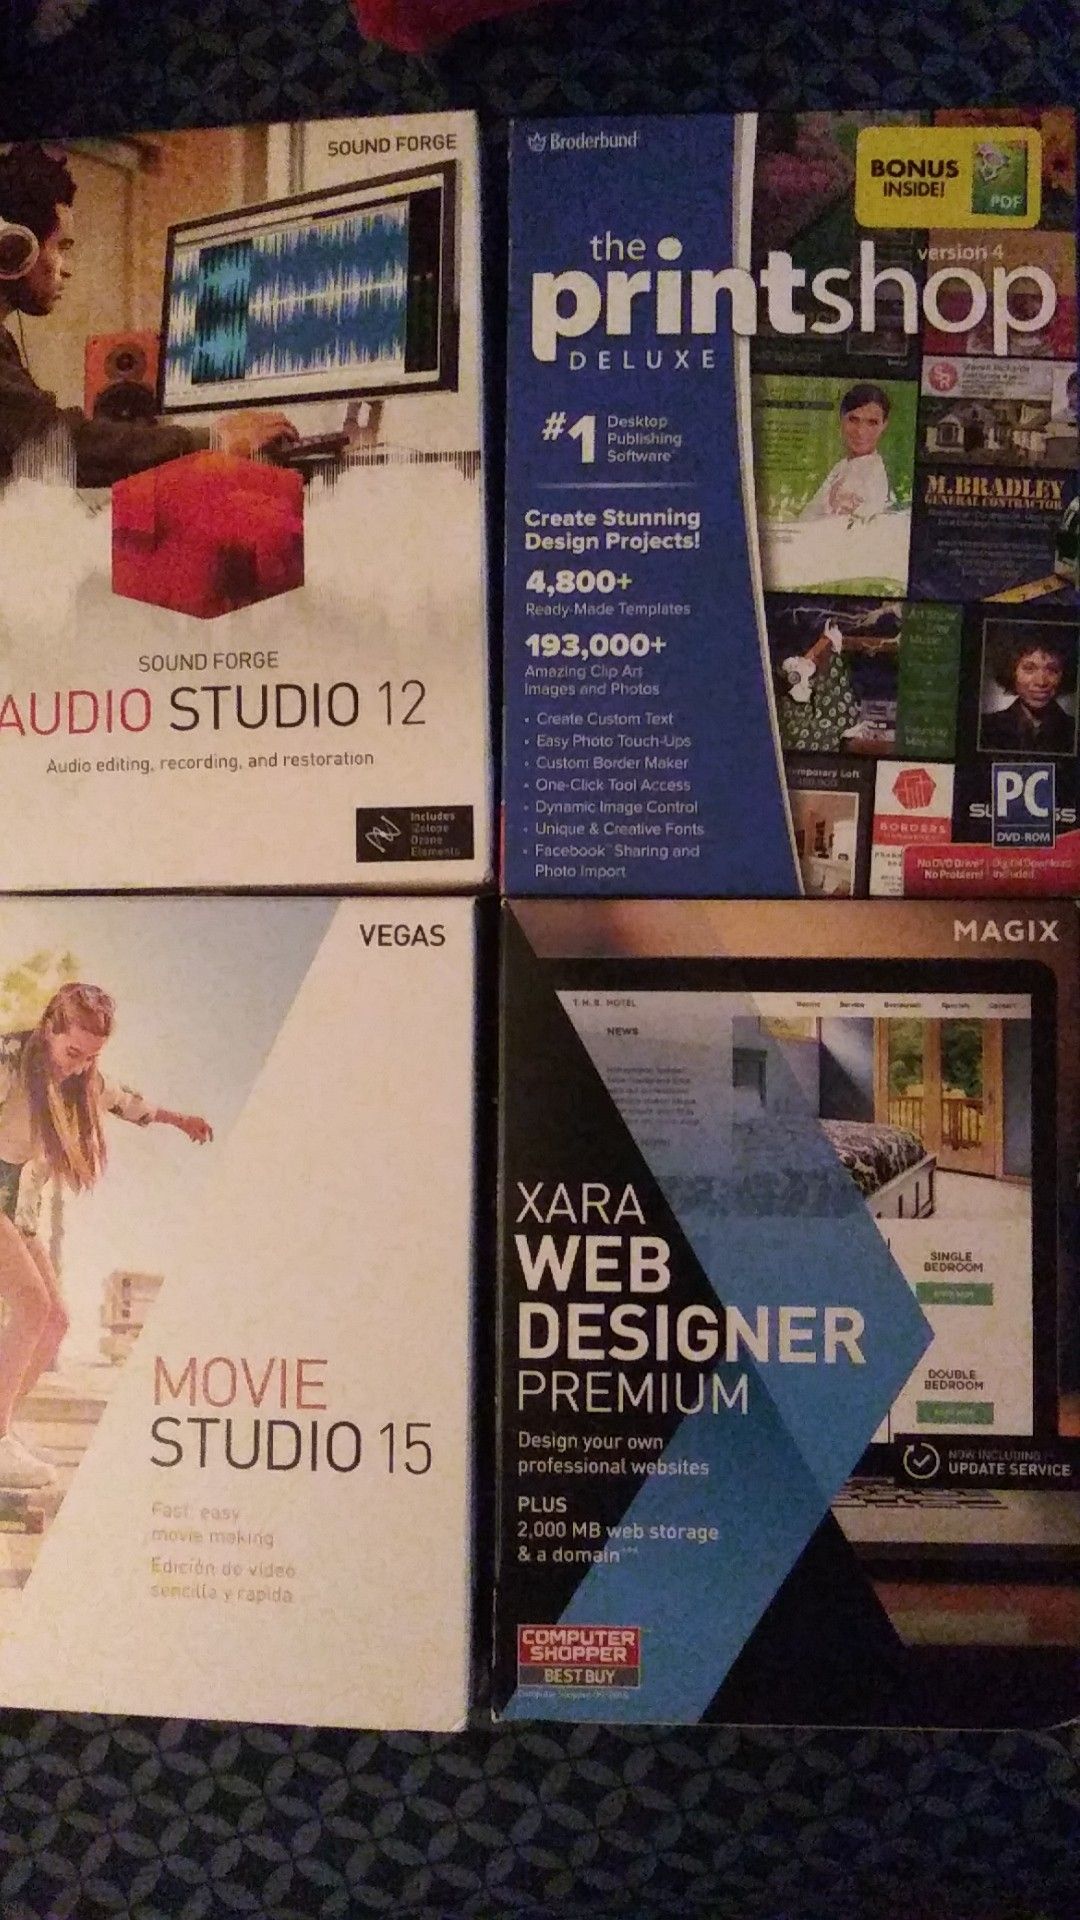 Movie Studio-Audio Studio-Printshop-Web Designer